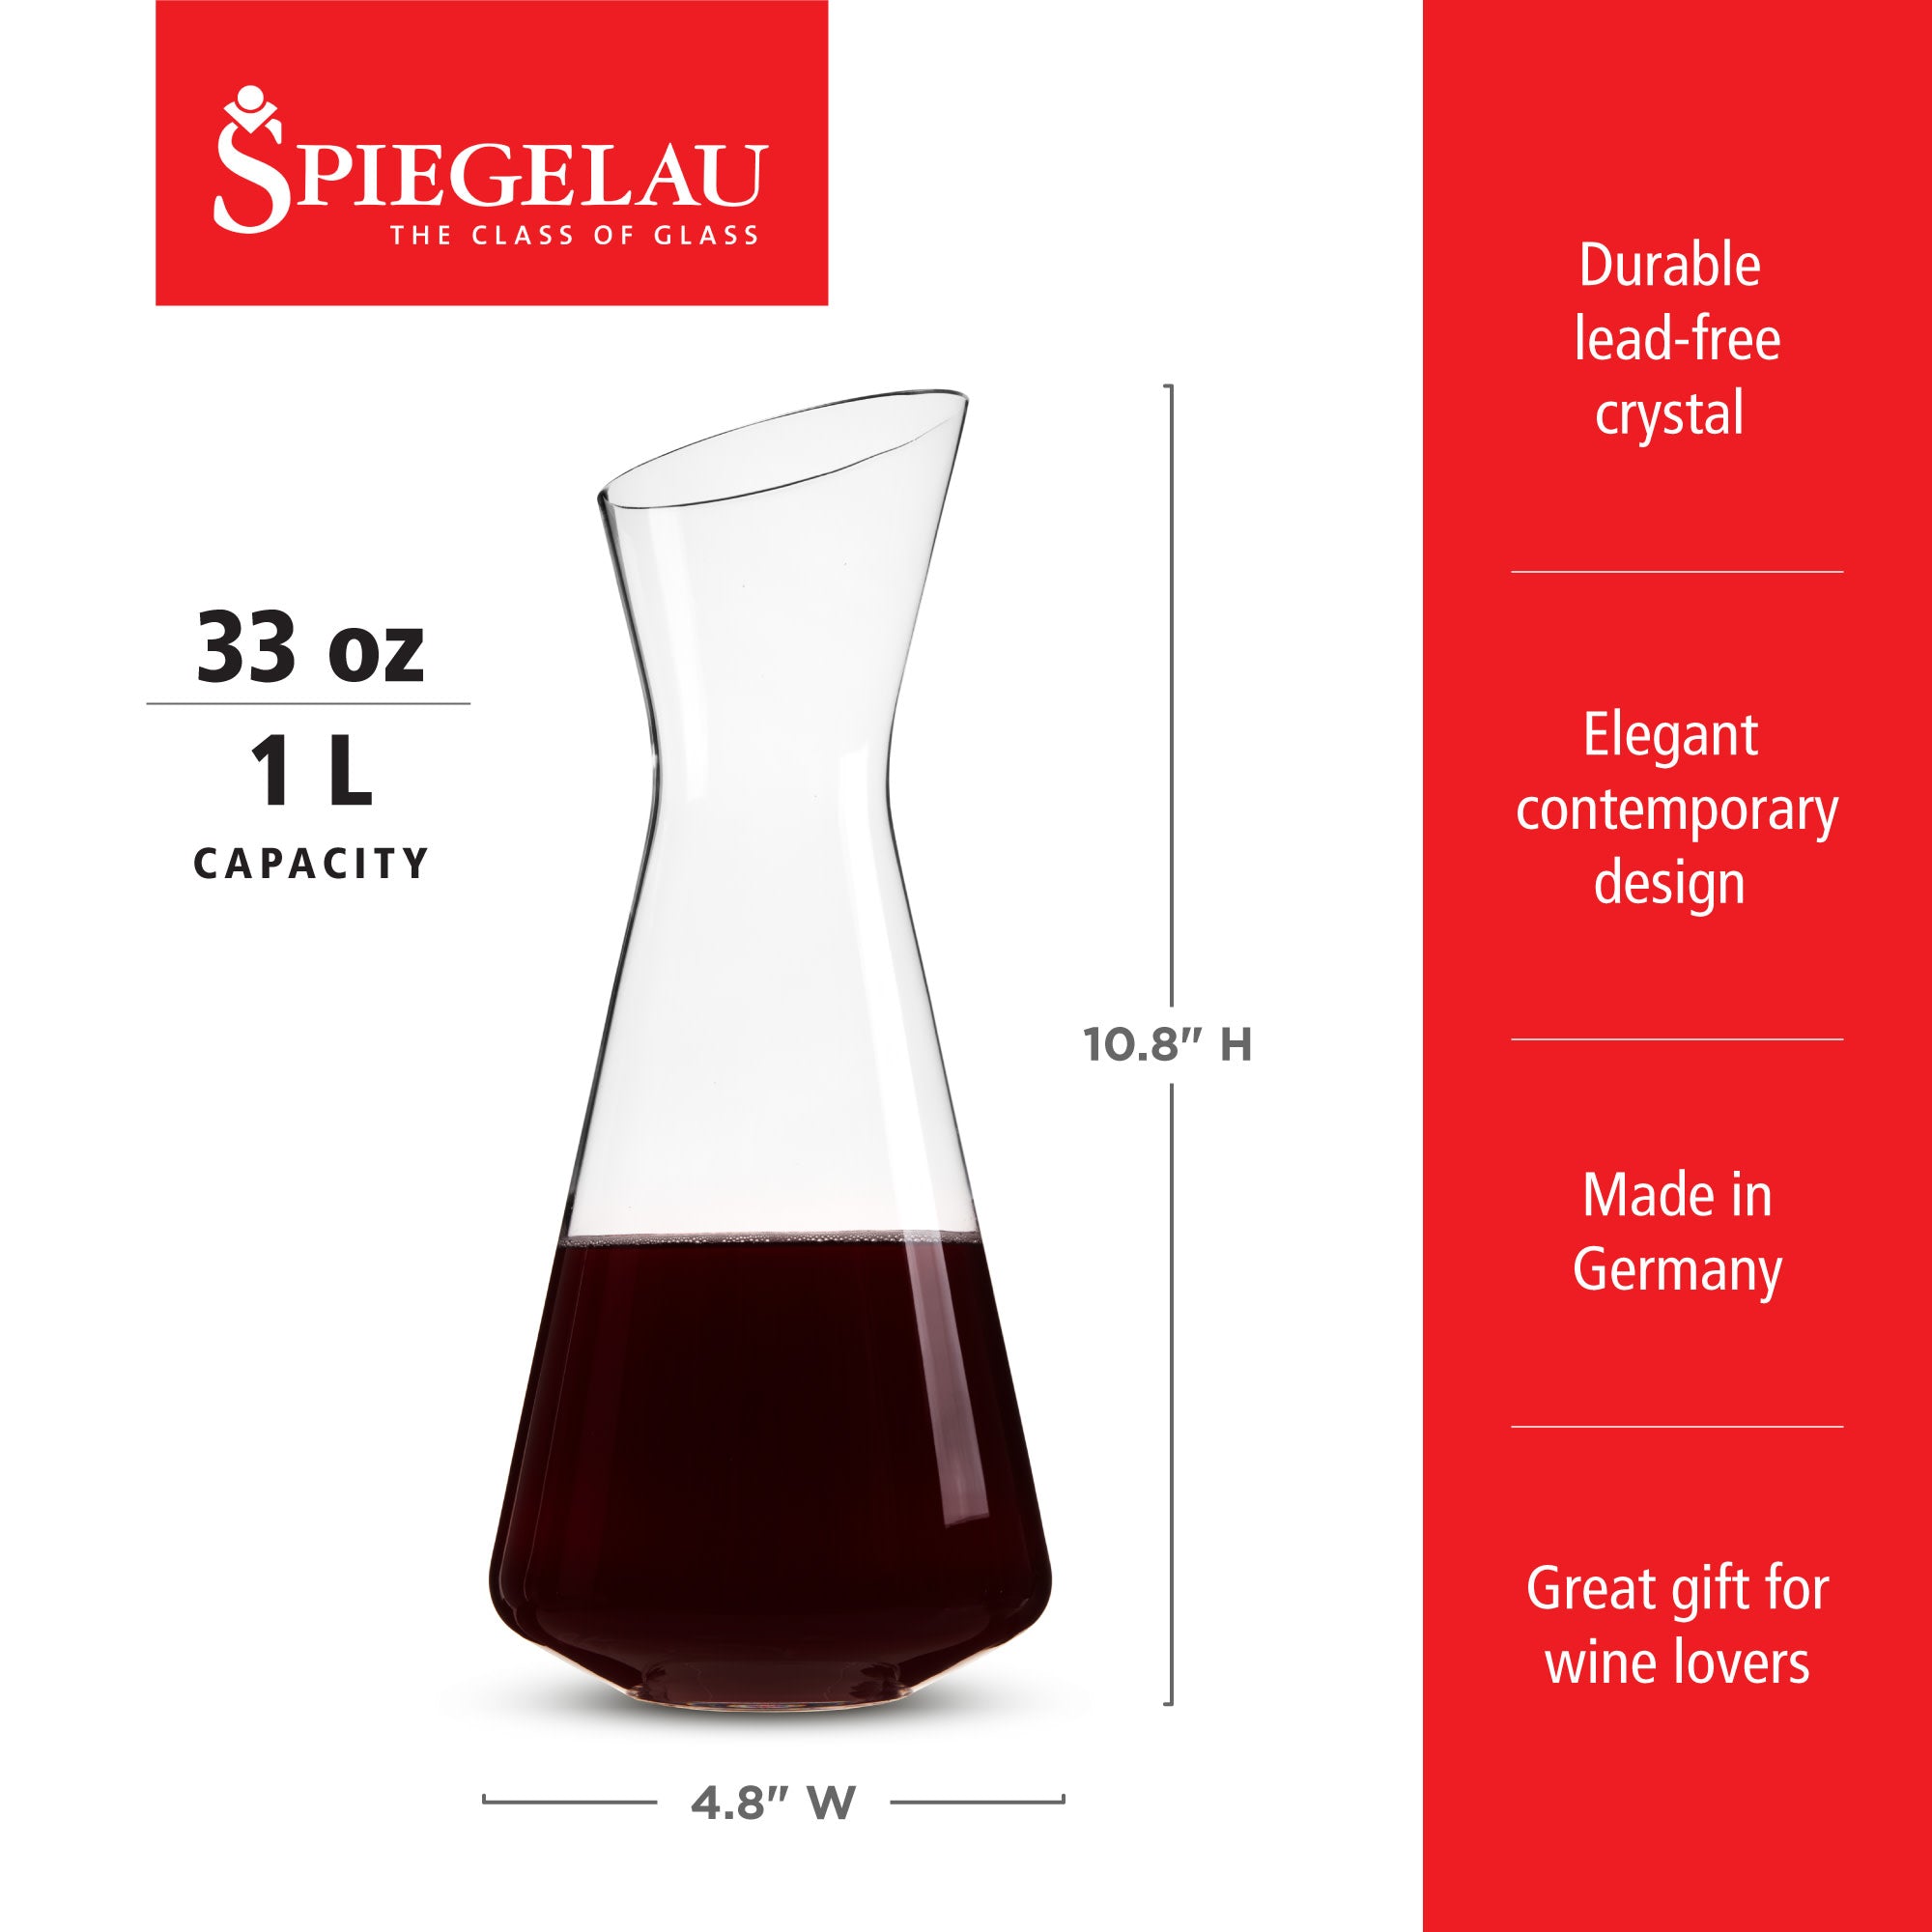 Spiegelau Style 1L Wine Decanter Set of 1 (4670157)